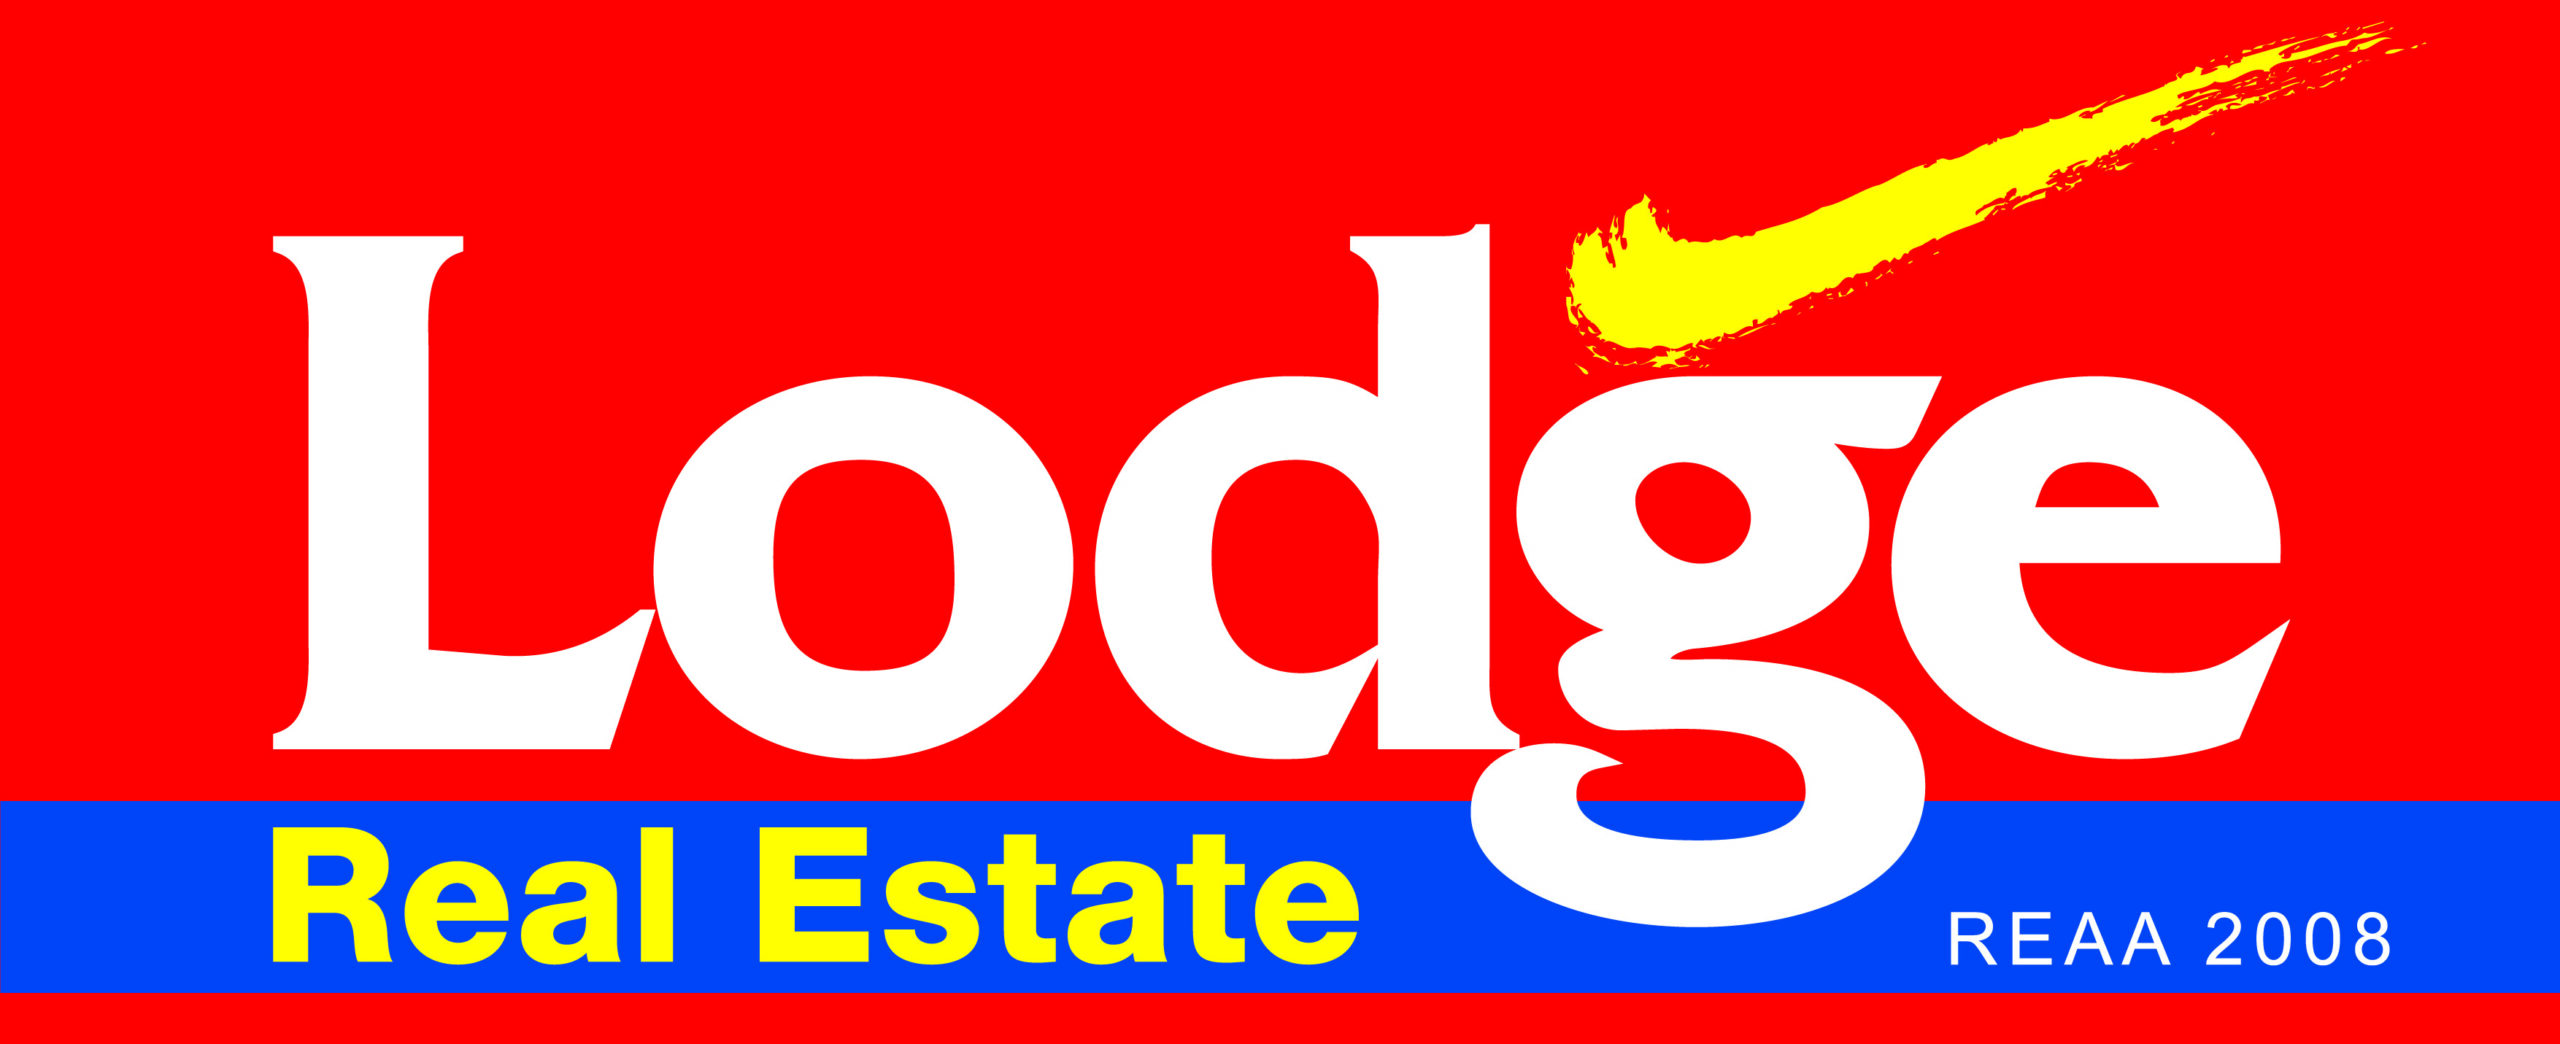 Lodge Real Estate